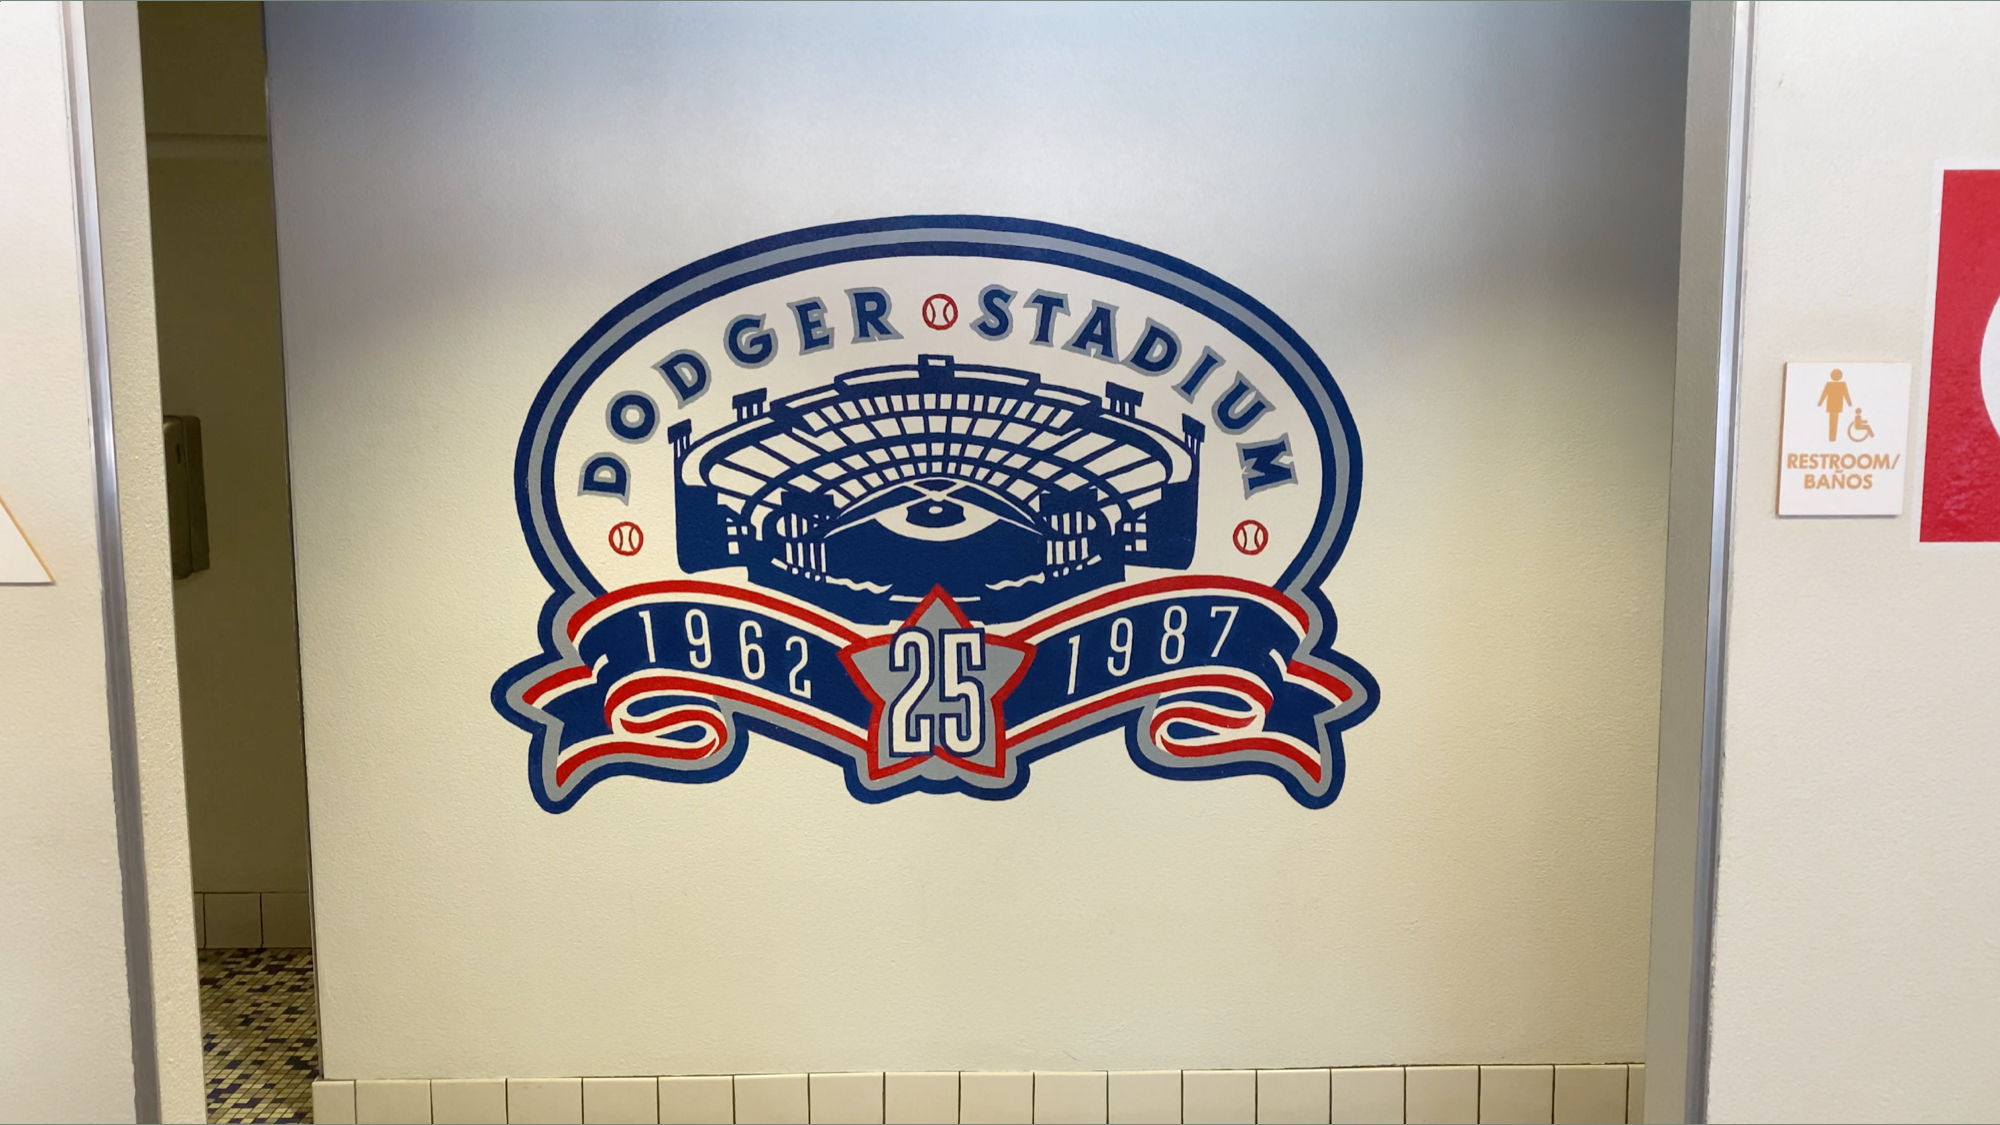 Dodger Stadium 25th Anniversary 1962-1987